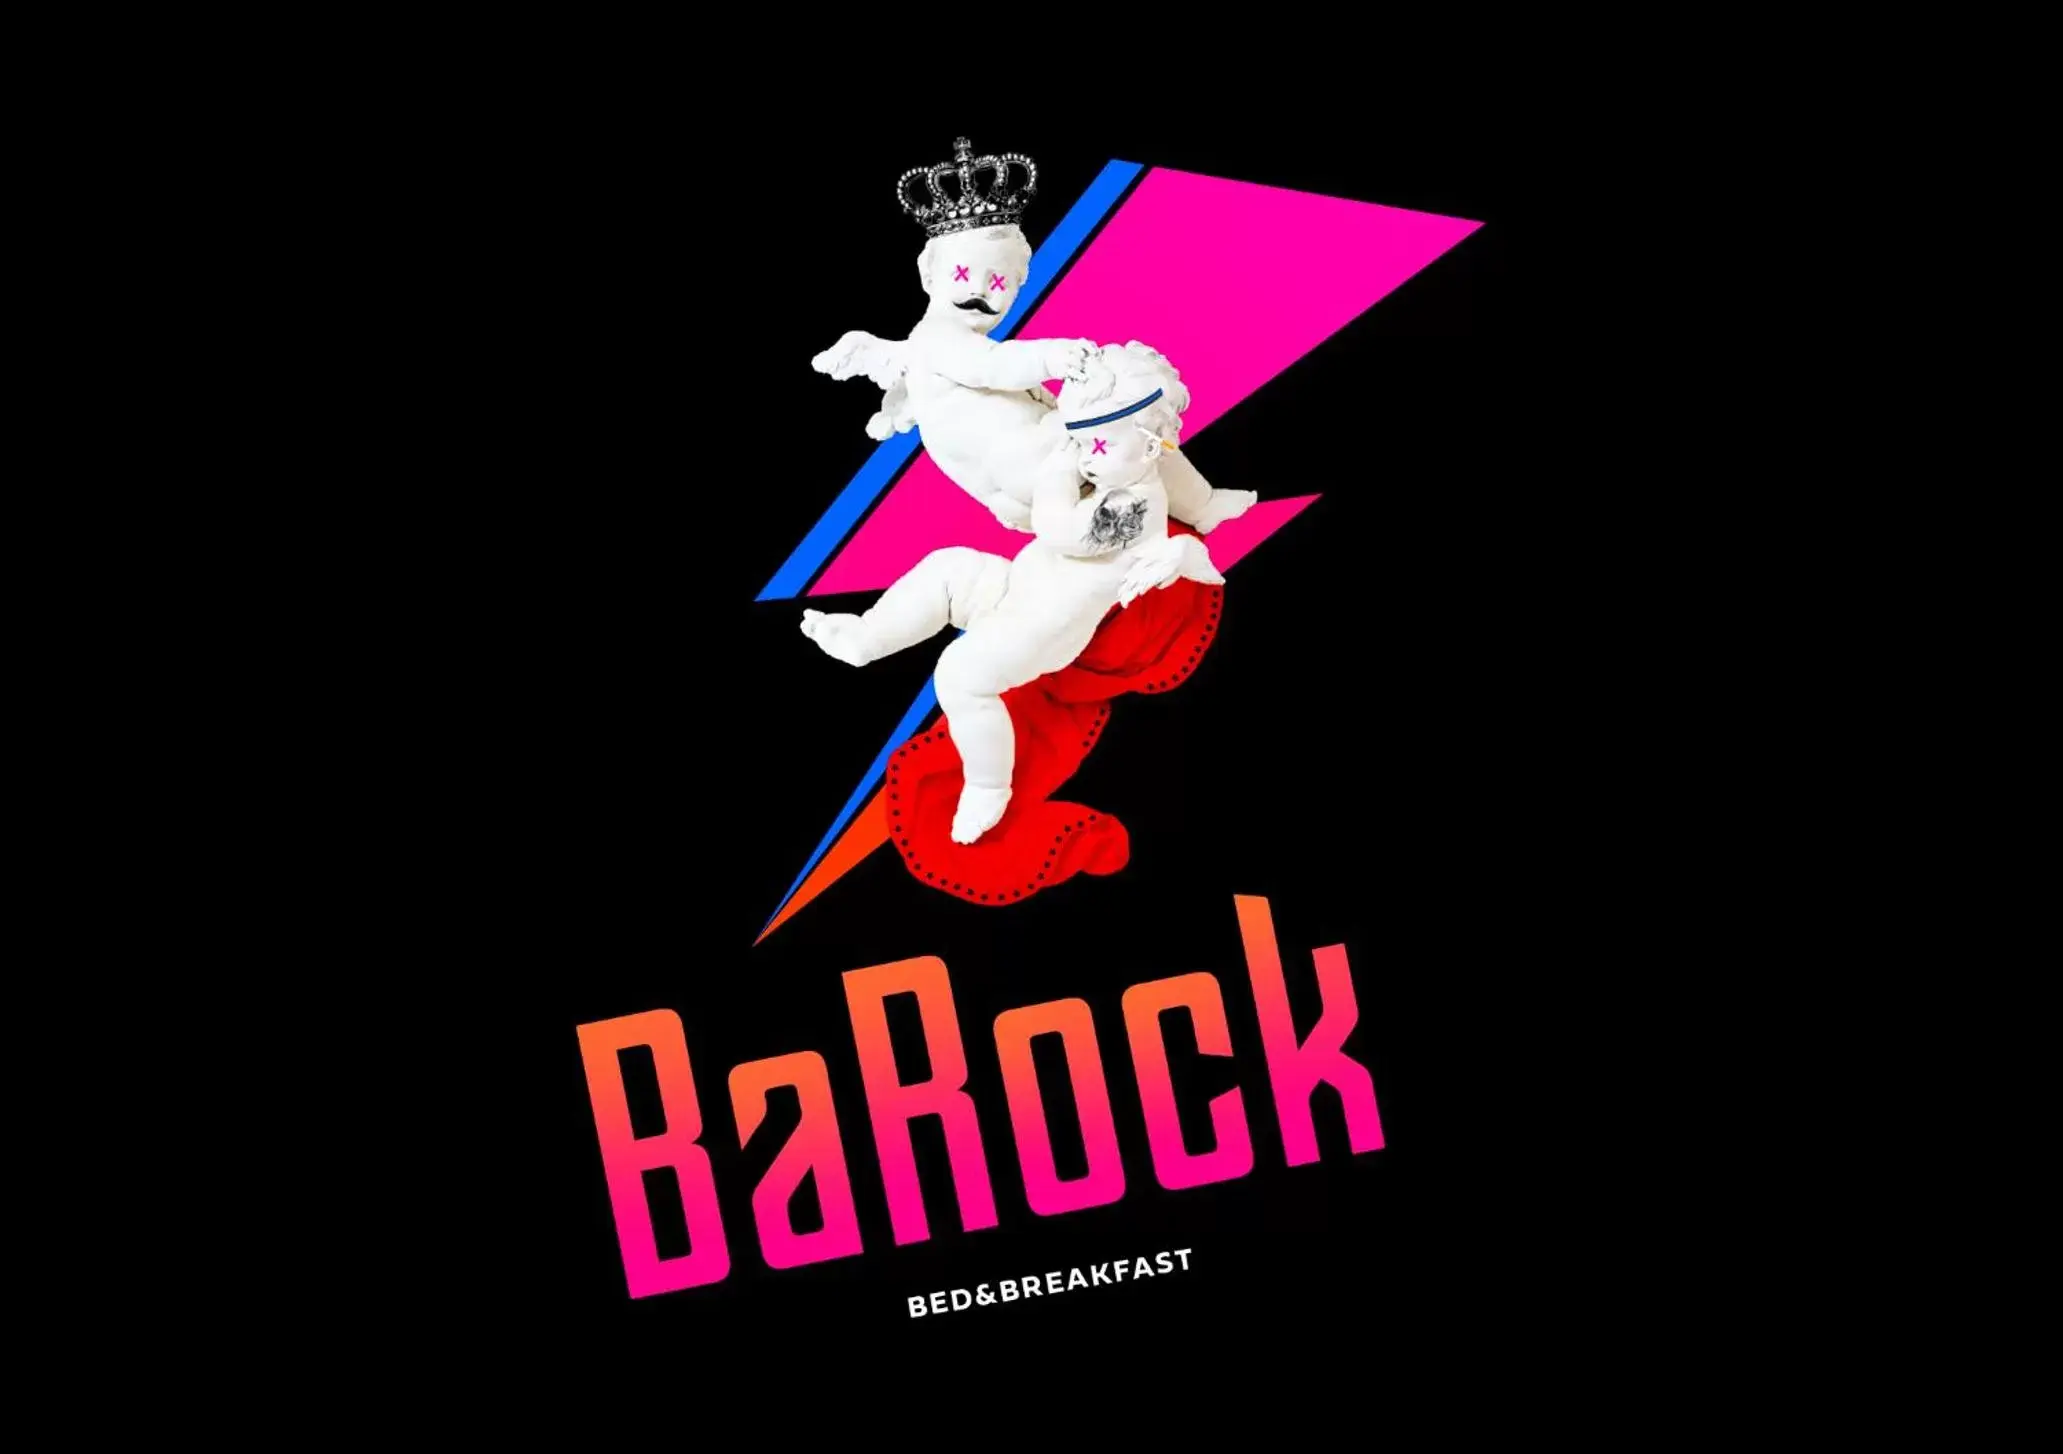 Logo/Certificate/Sign in BaRock B&B Palermo